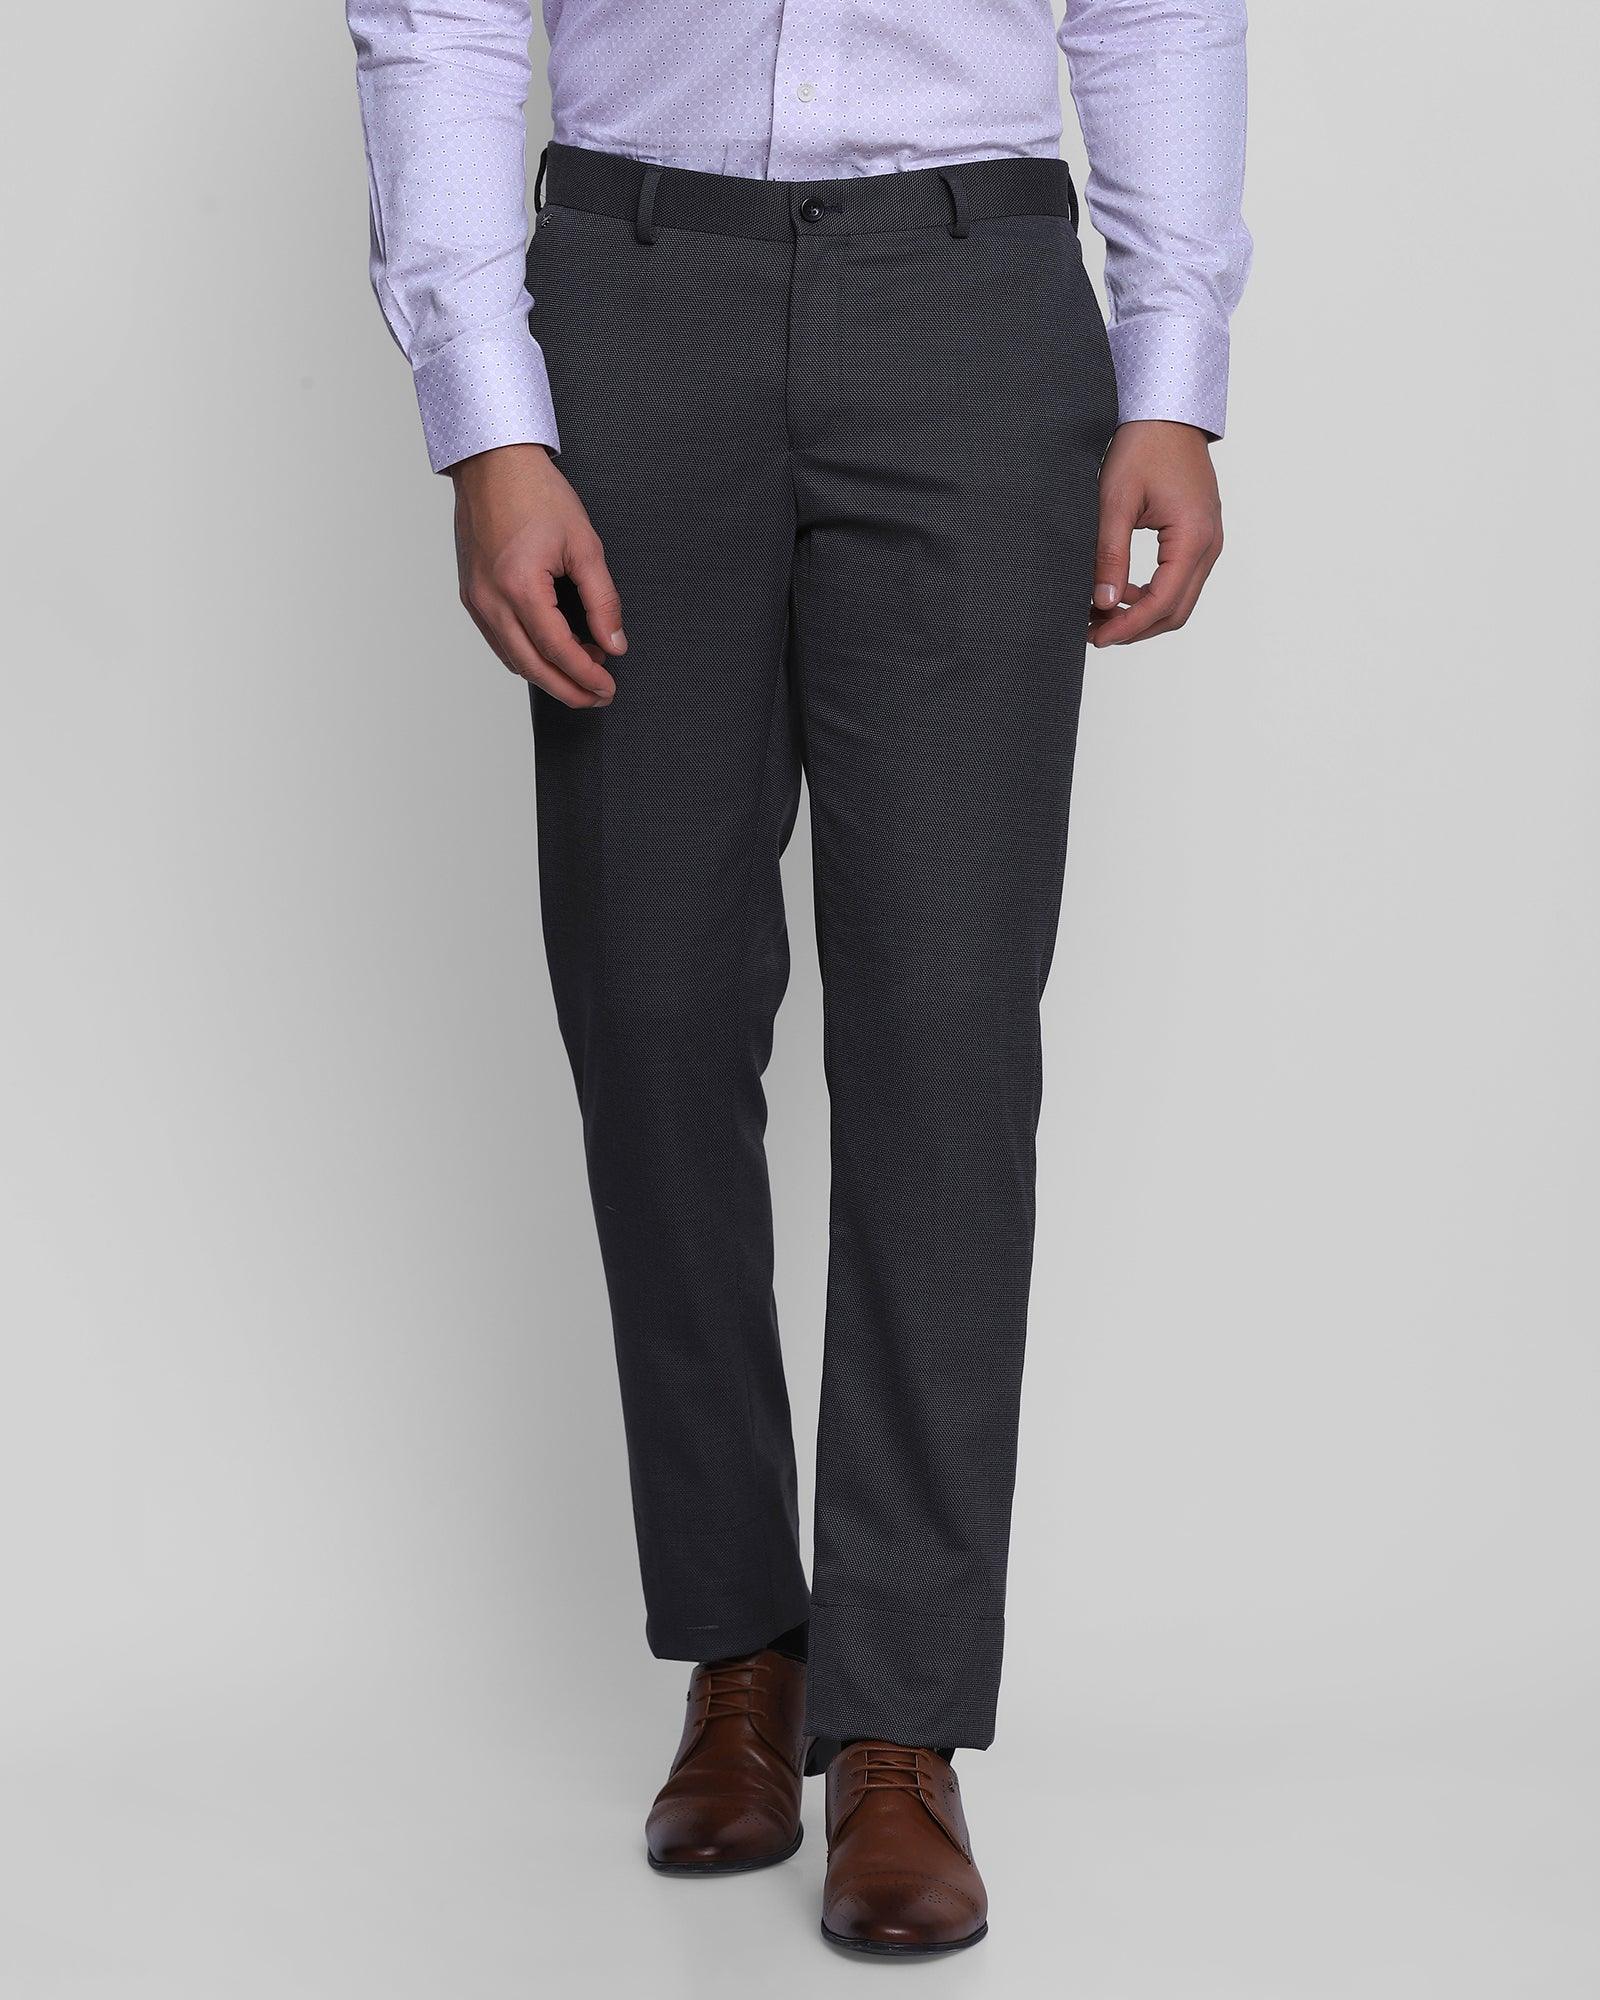 Slim Fit B-91 Formal Charcoal Textured Trouser - Lexander